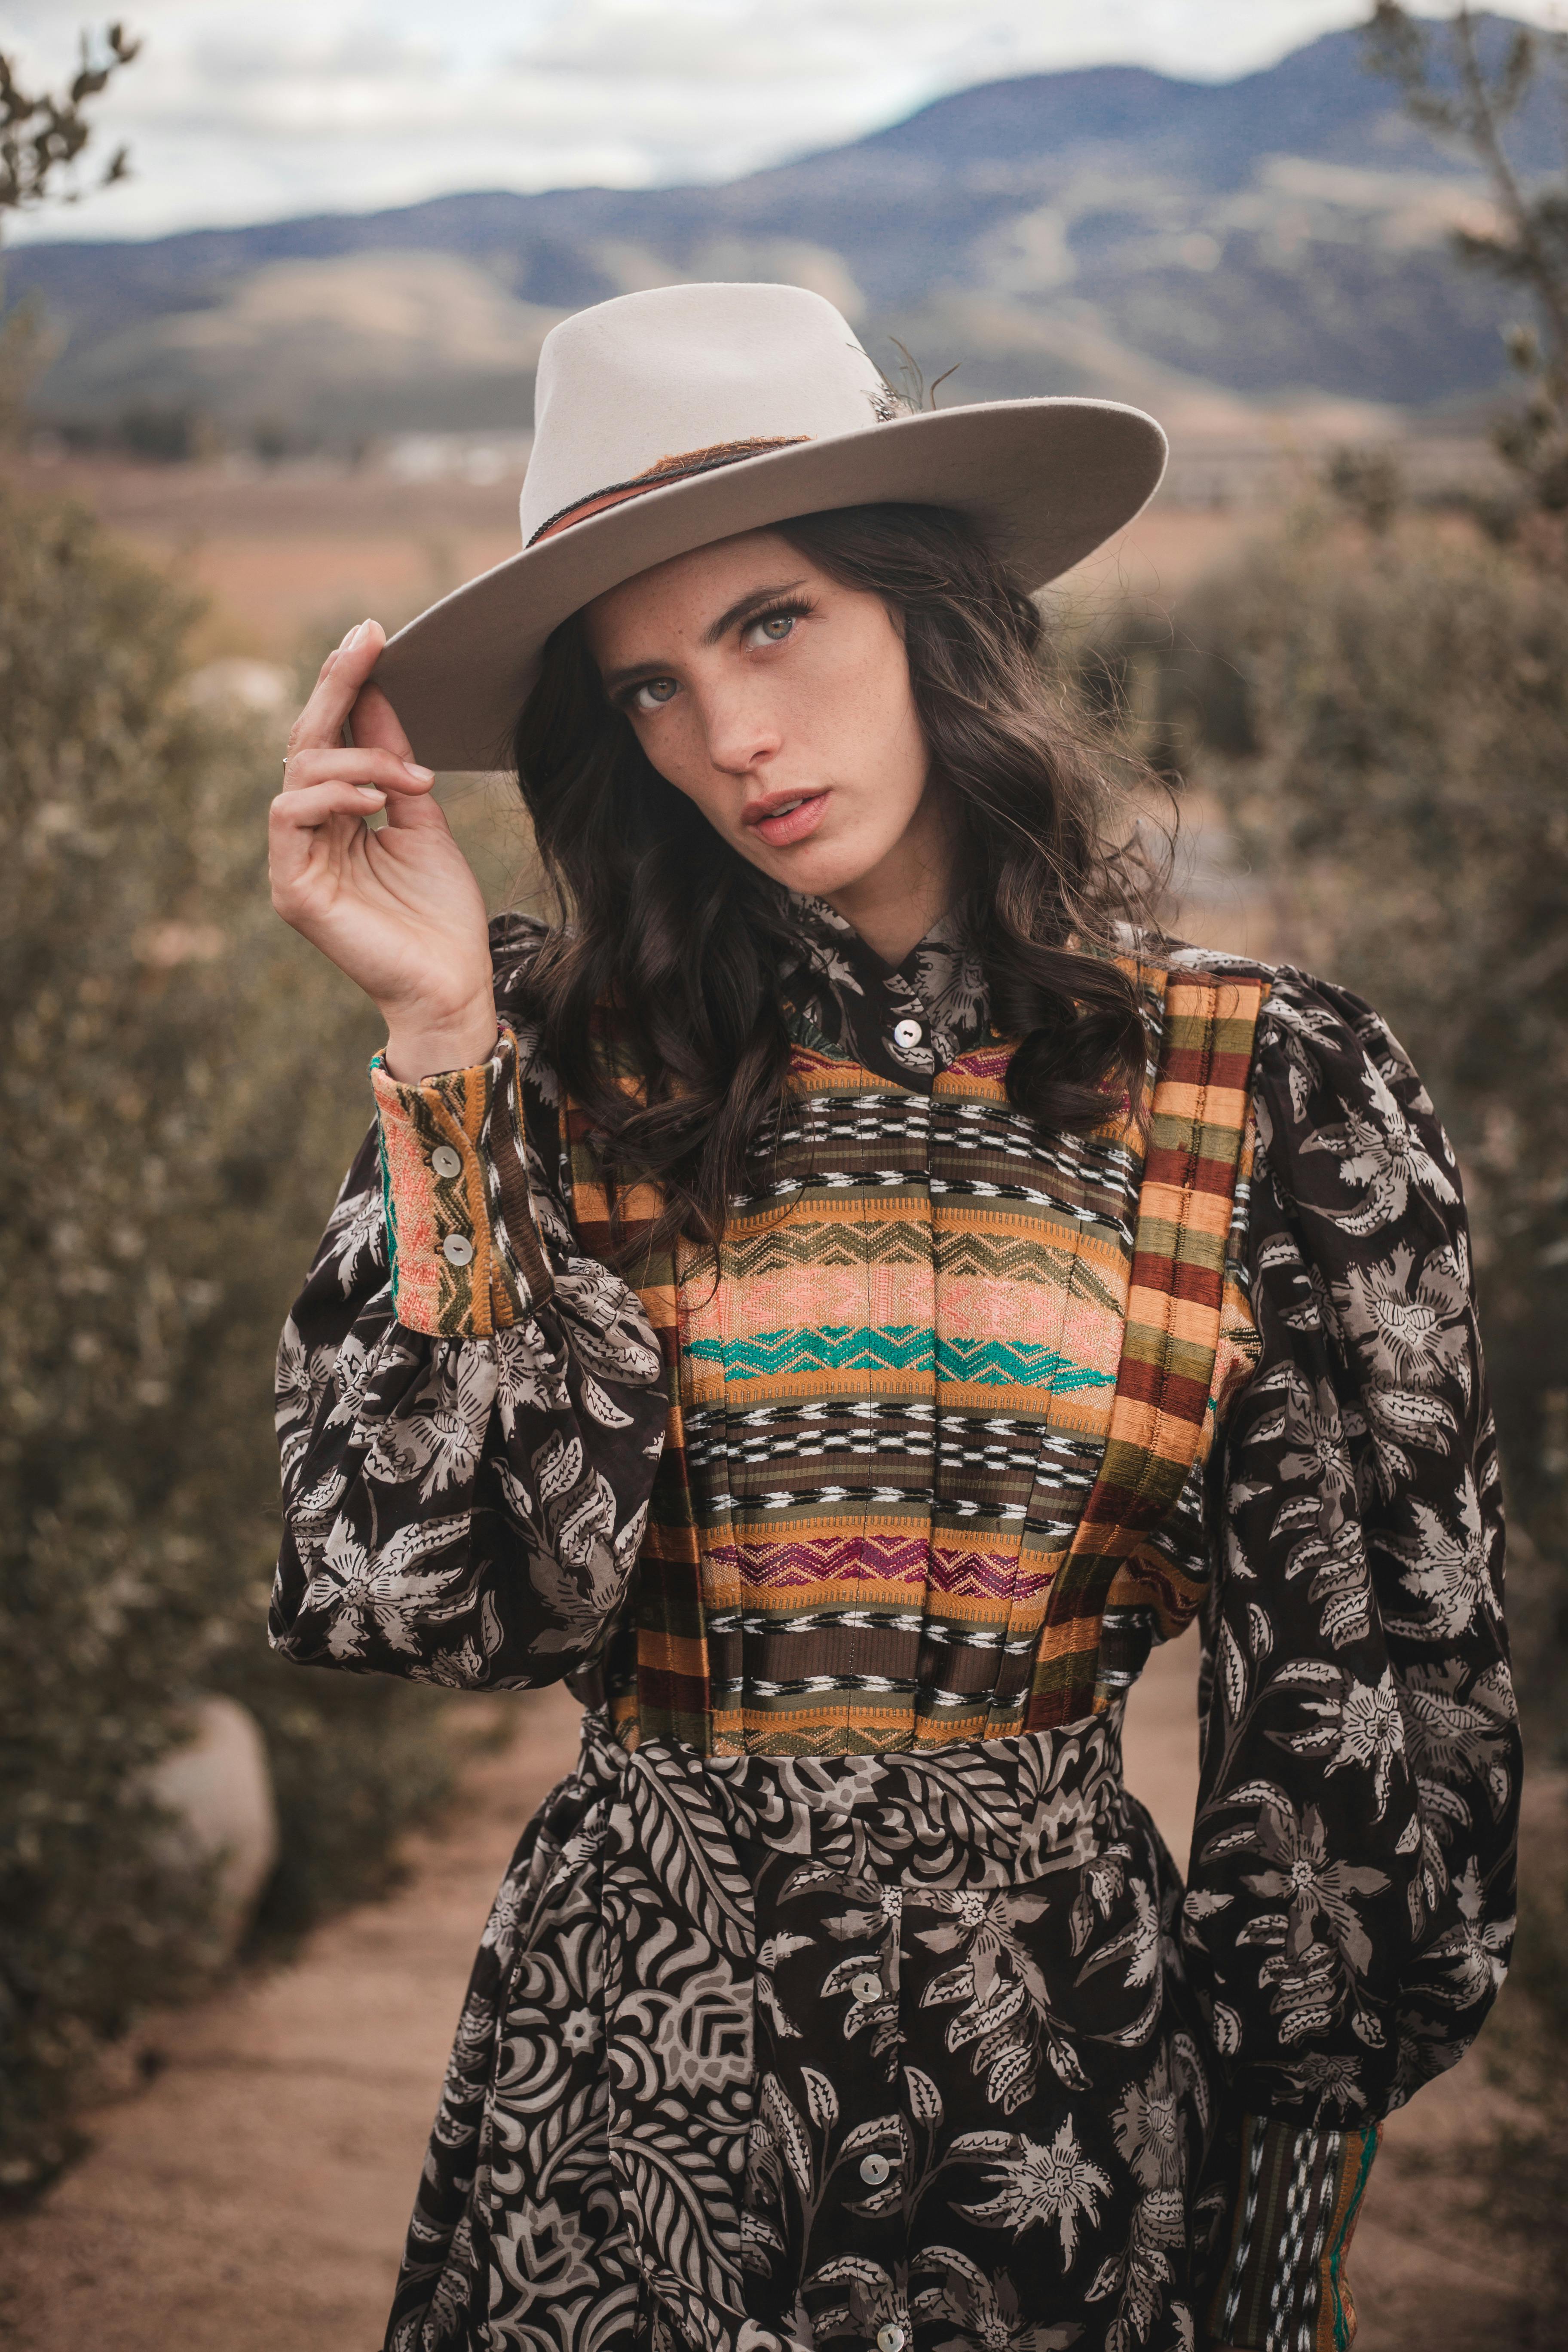 fashion shot of a woman in a patterned dress in semi desert